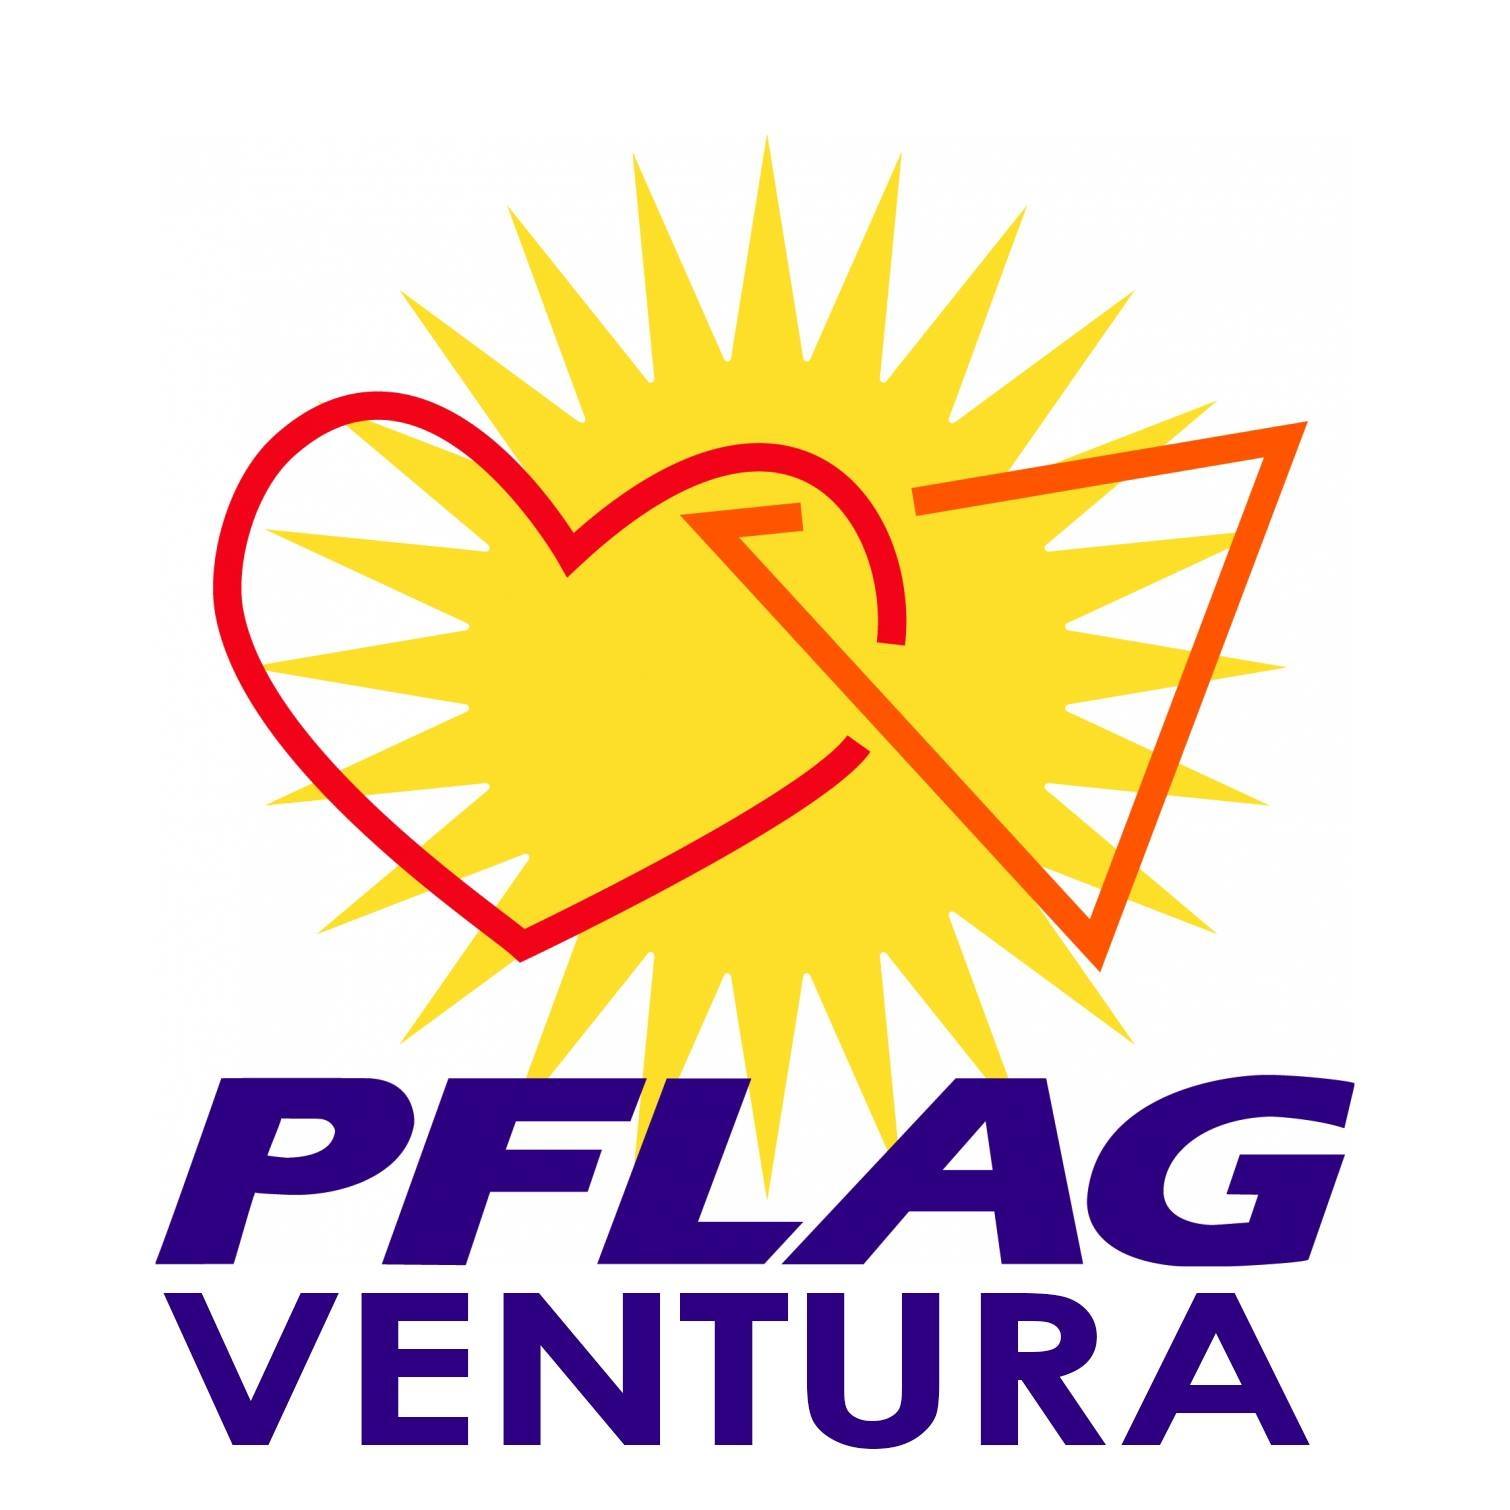 LGBTQ Organization in San Diego California - PFLAG Ventura